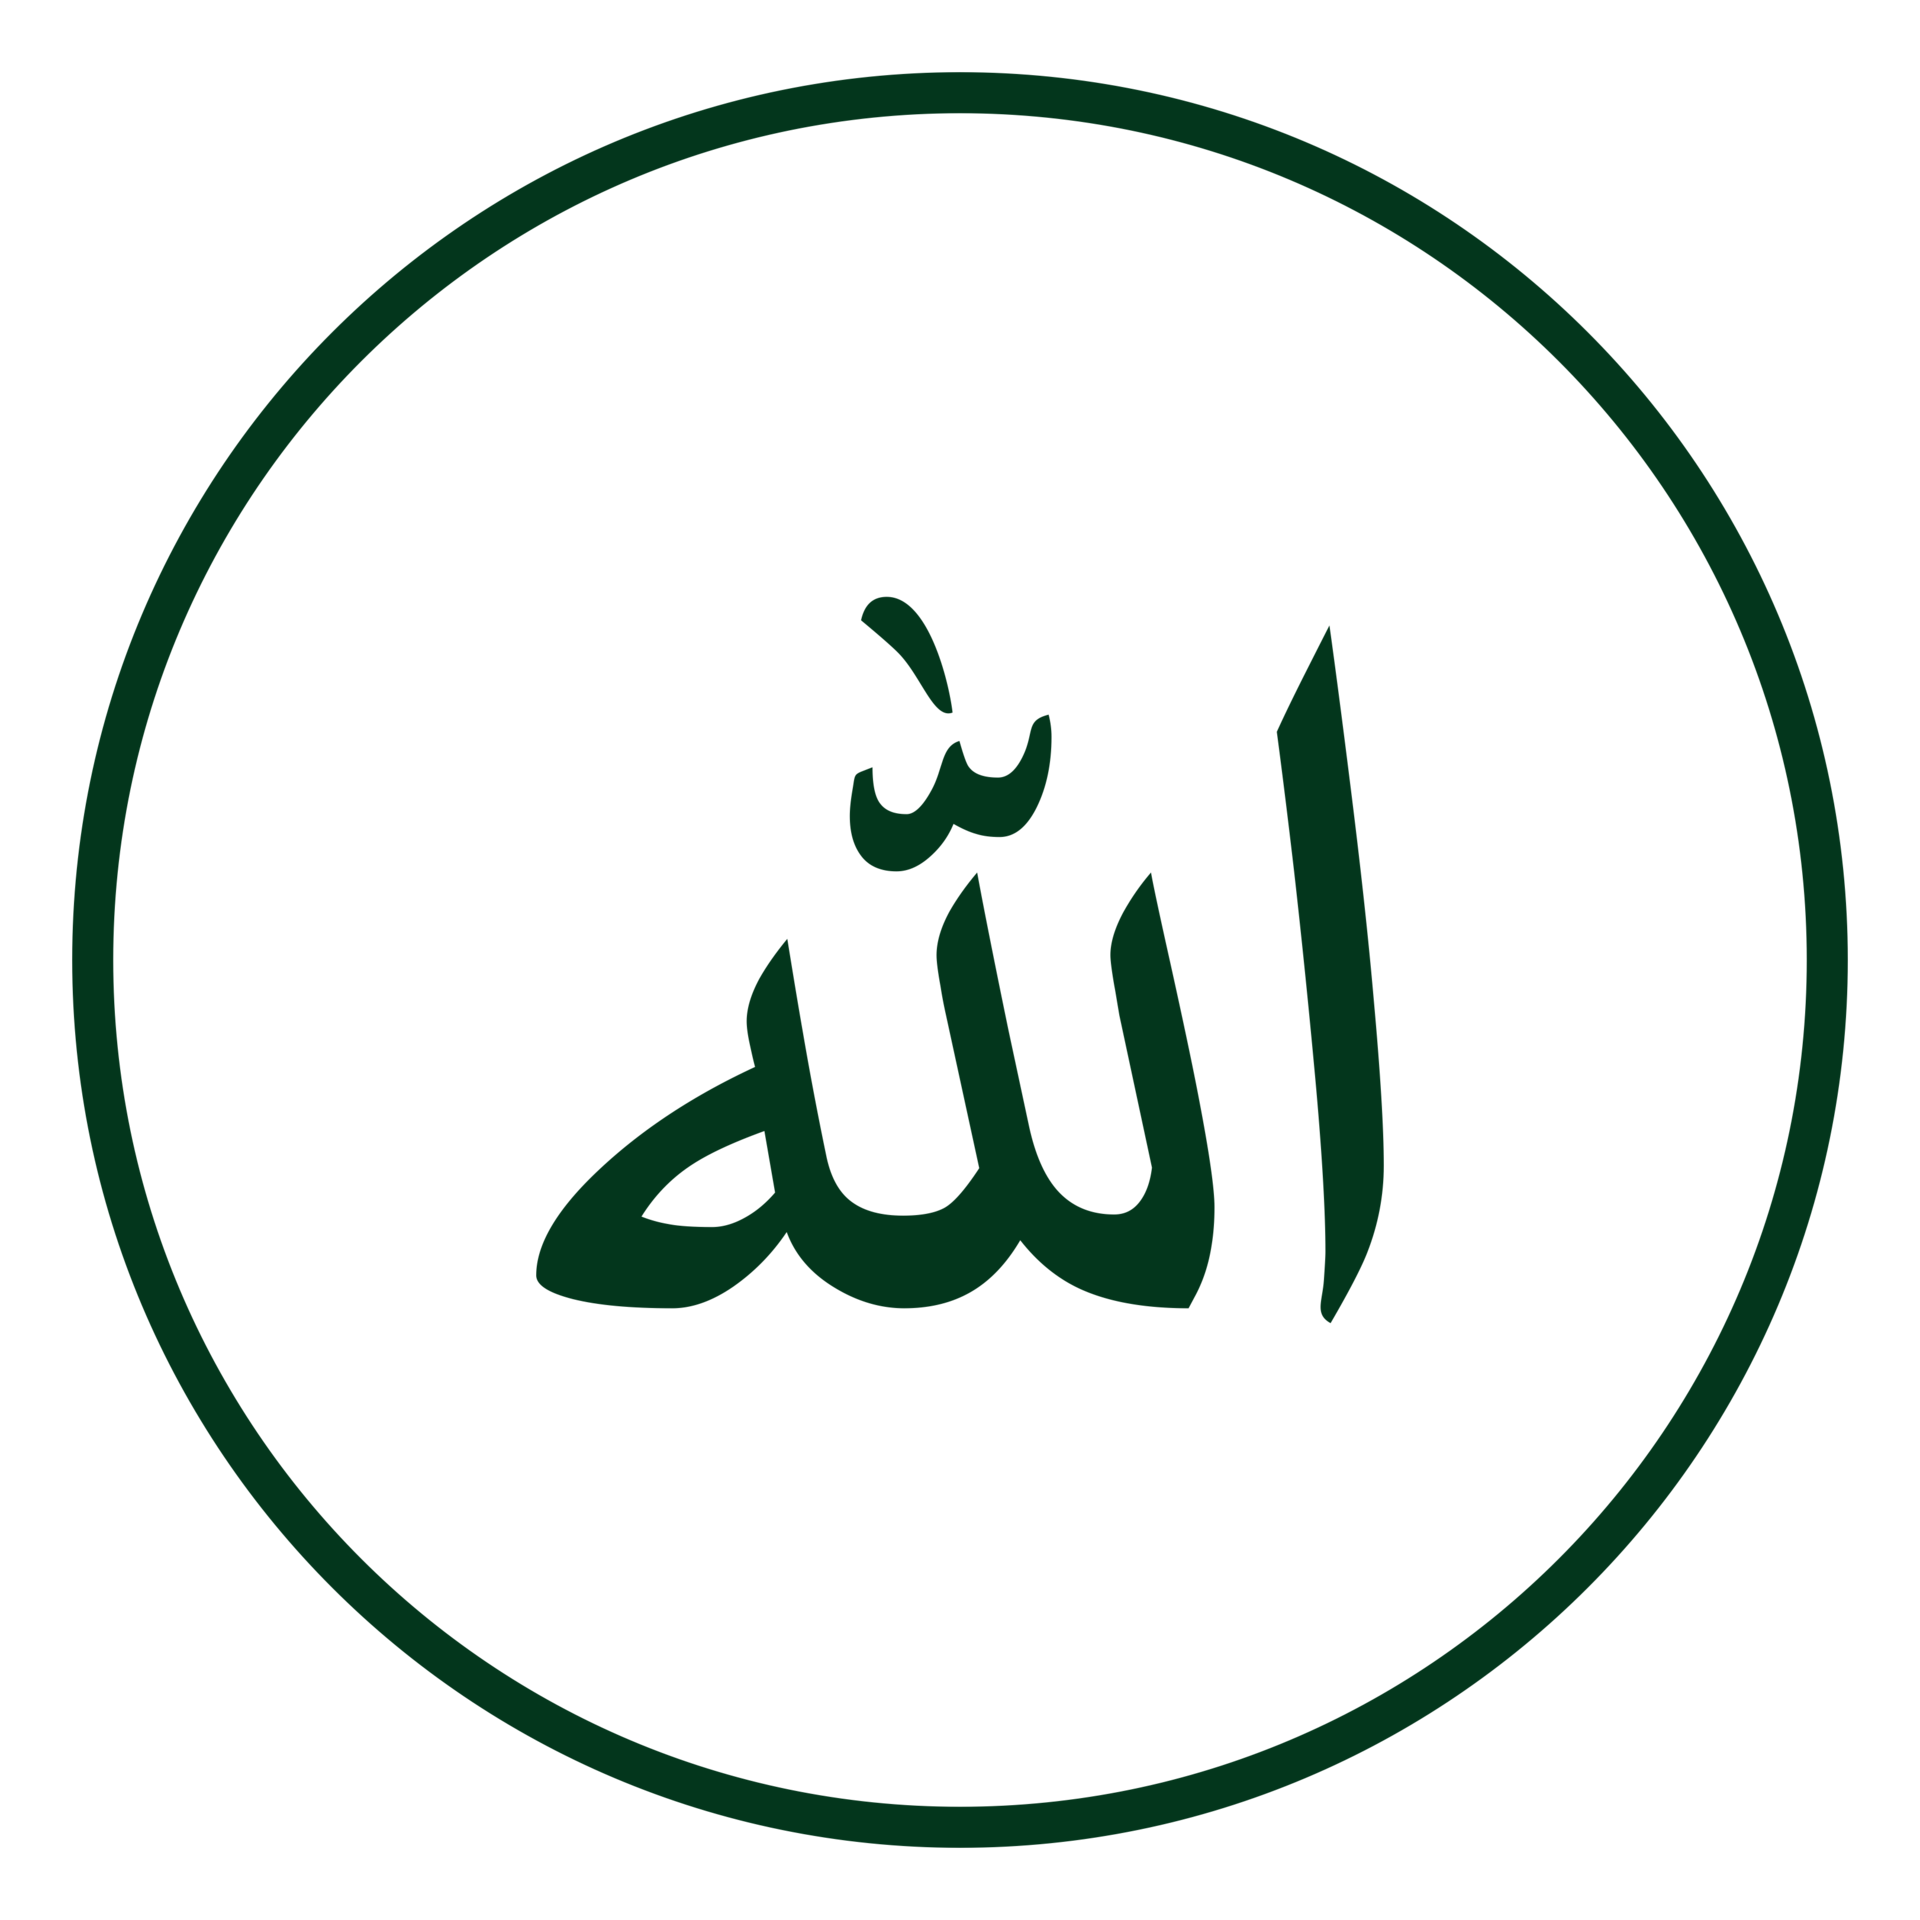 allah-in-arabic-writing-god-name-in-arabic-allah-calligraphy-simple-design-format-free-png.png